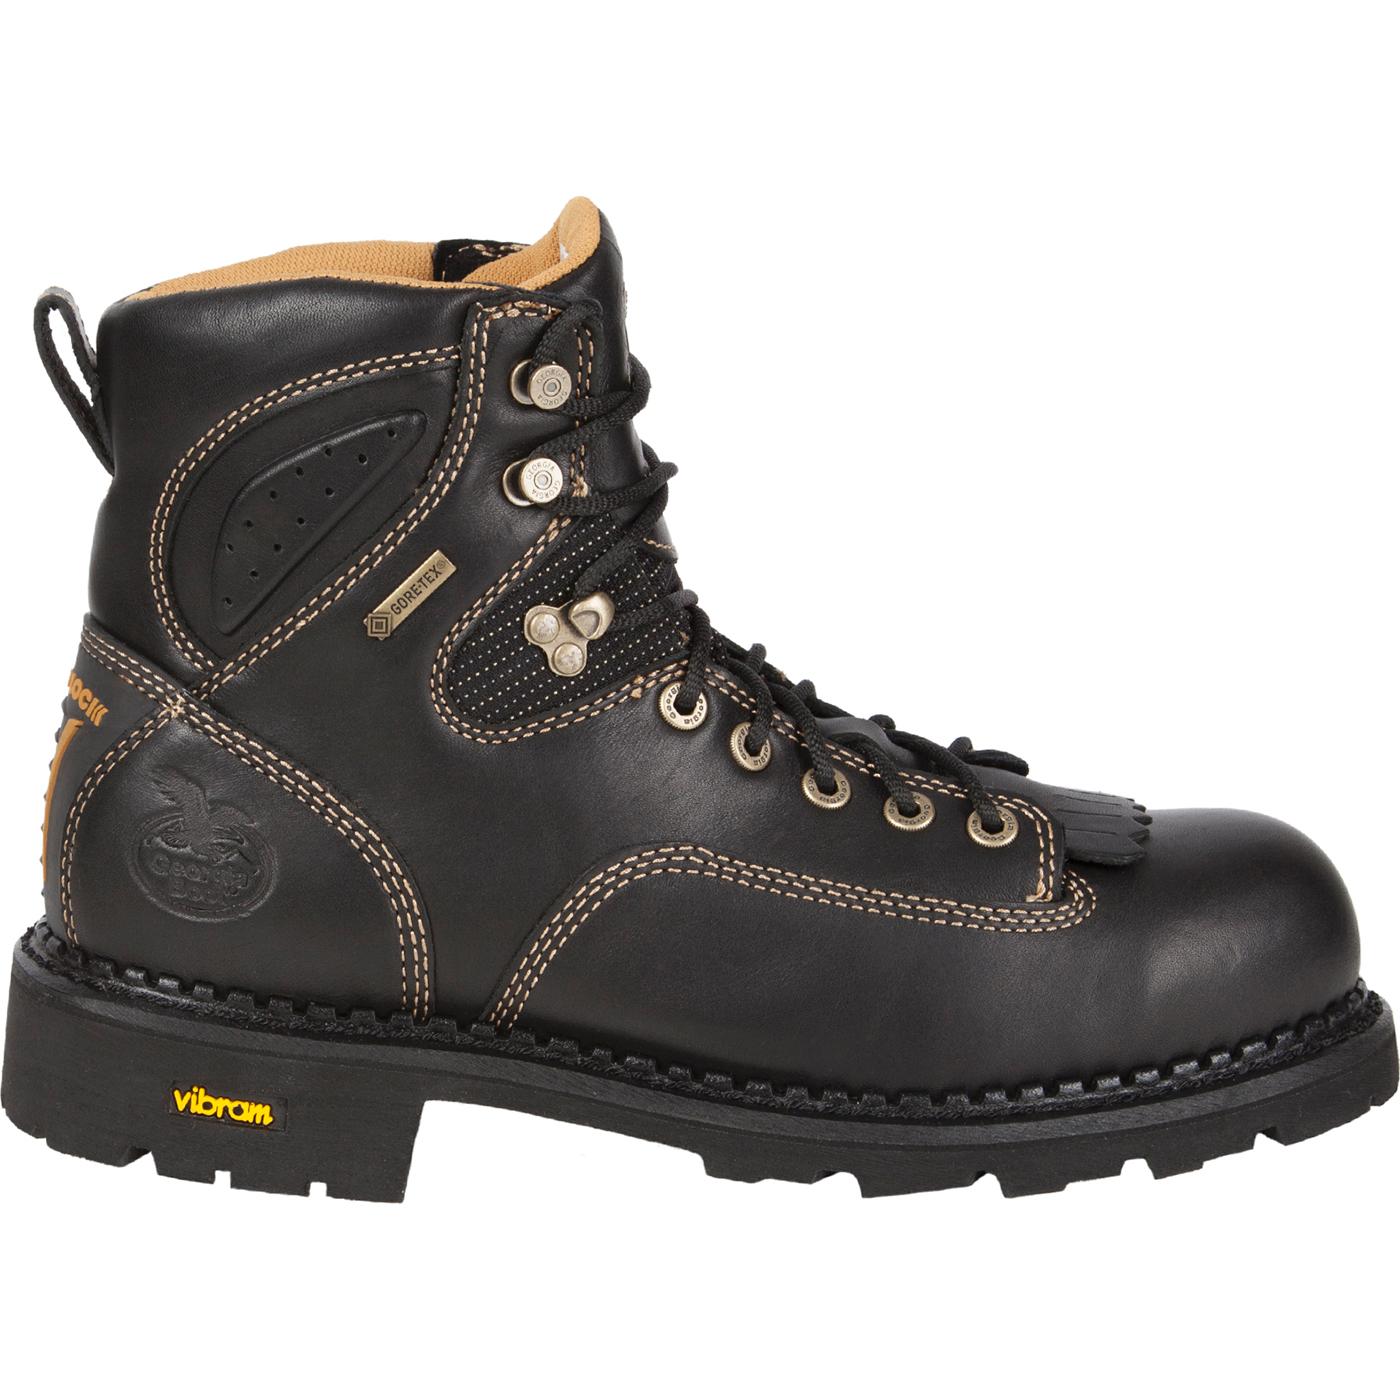 6 Inch GORE-TEX® Waterproof Low Heel Logger work boot by Georgia Boot